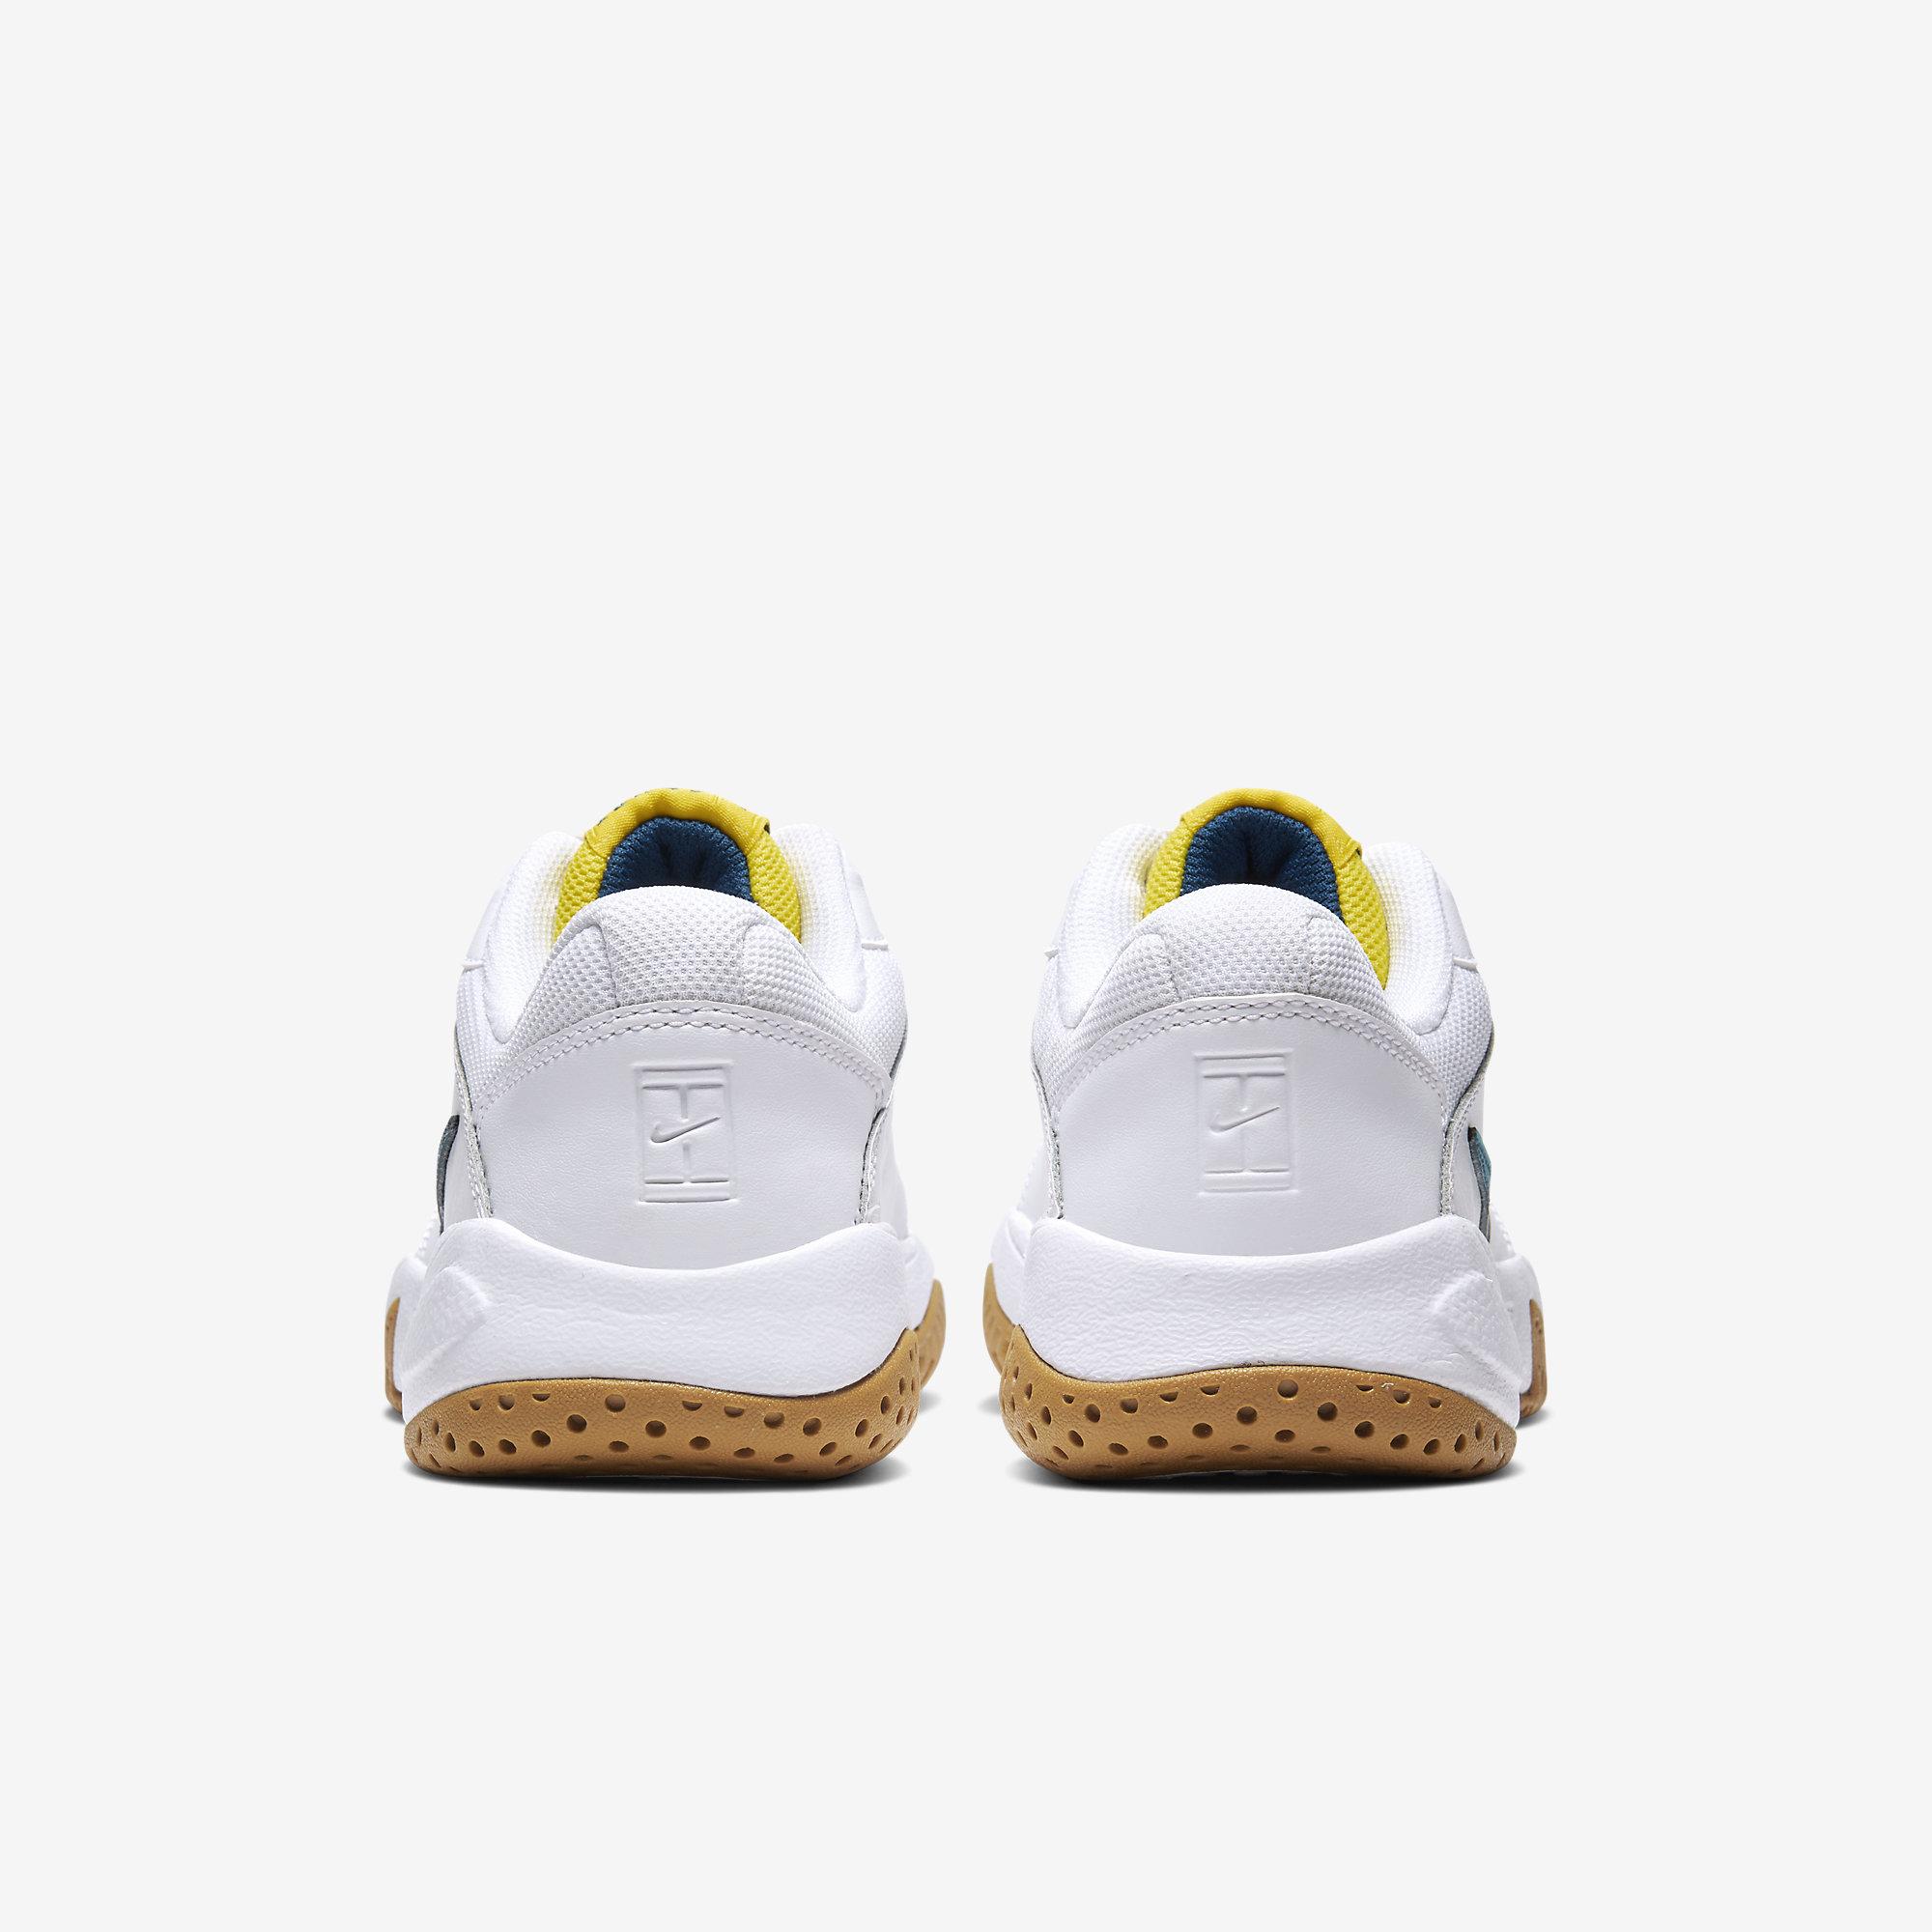 Nike Womens Lite 2 Tennis Shoes - White/Optic Yellow - Tennisnuts.com